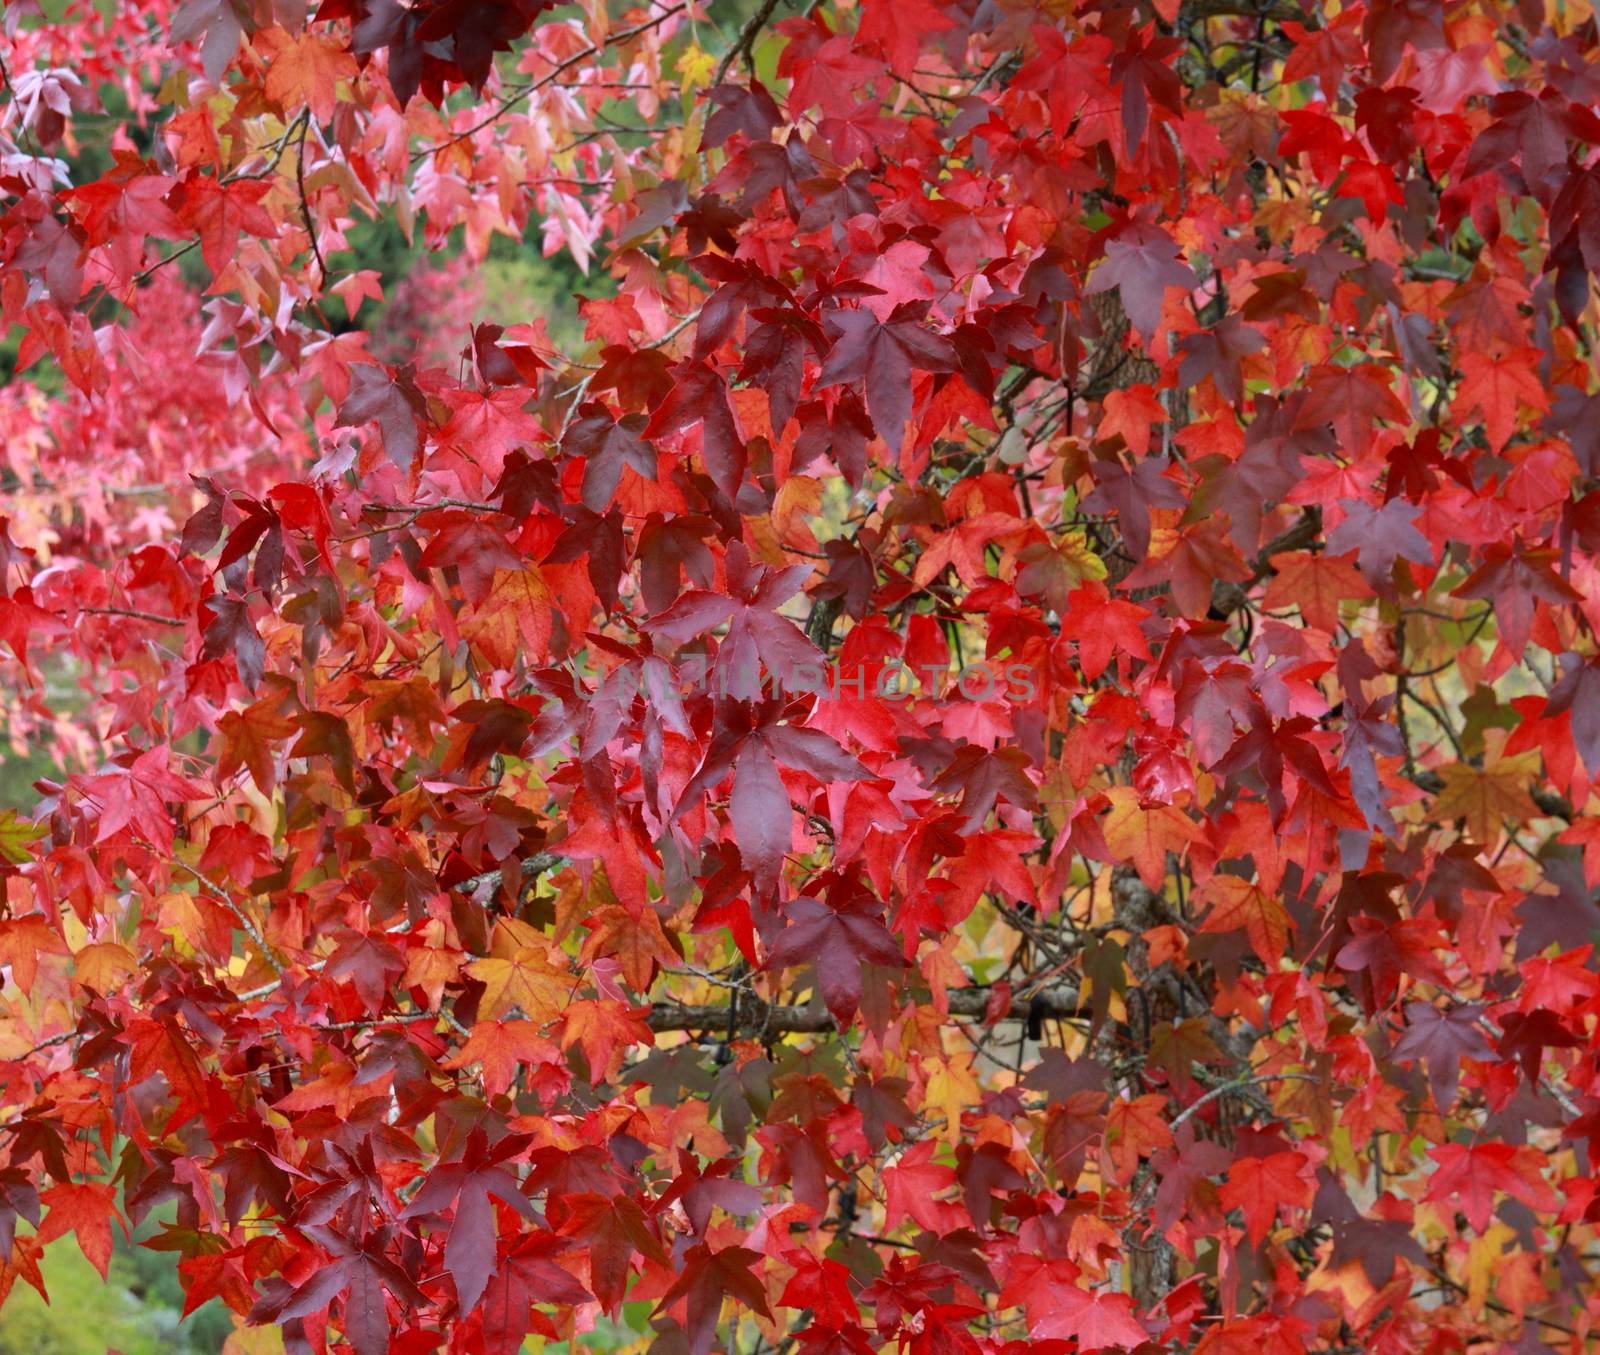 Autumn leaf background by mitzy